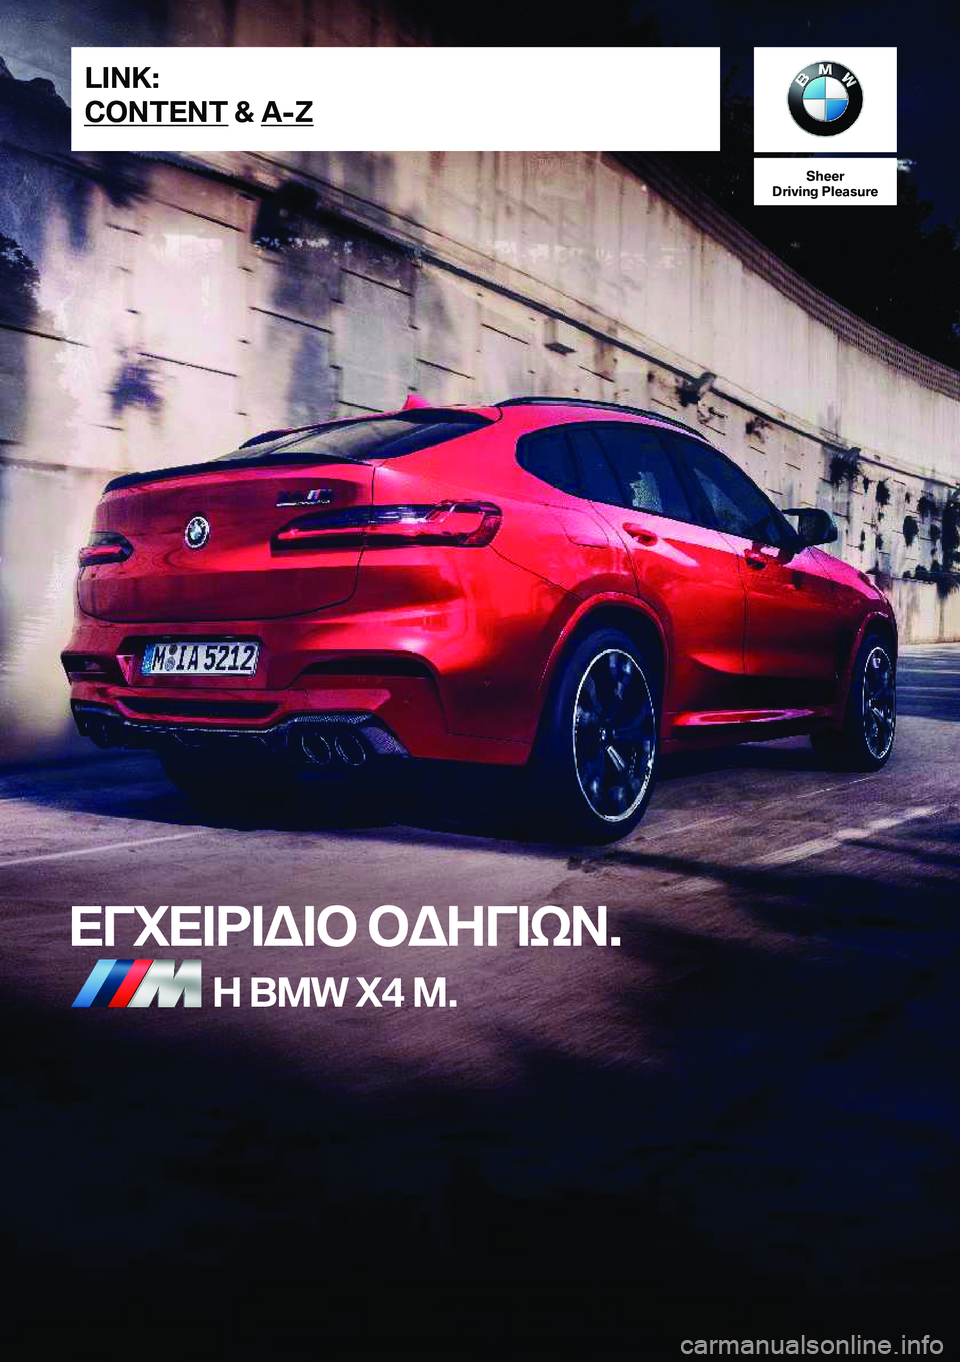 BMW X4 M 2020  ΟΔΗΓΌΣ ΧΡΉΣΗΣ (in Greek) �S�h�e�e�r
�D�r�i�v�i�n�g��P�l�e�a�s�u�r�e
XViX=d=W=b�bWZV=kA�.Z��B�M�W��X�4��M�.�L�I�N�K�:
�C�O�N�T�E�N�T��&��A�-�Z�O�n�l�i�n�e��E�d�i�t�i�o�n��f�o�r��P�a�r�t��n�o�.��0�